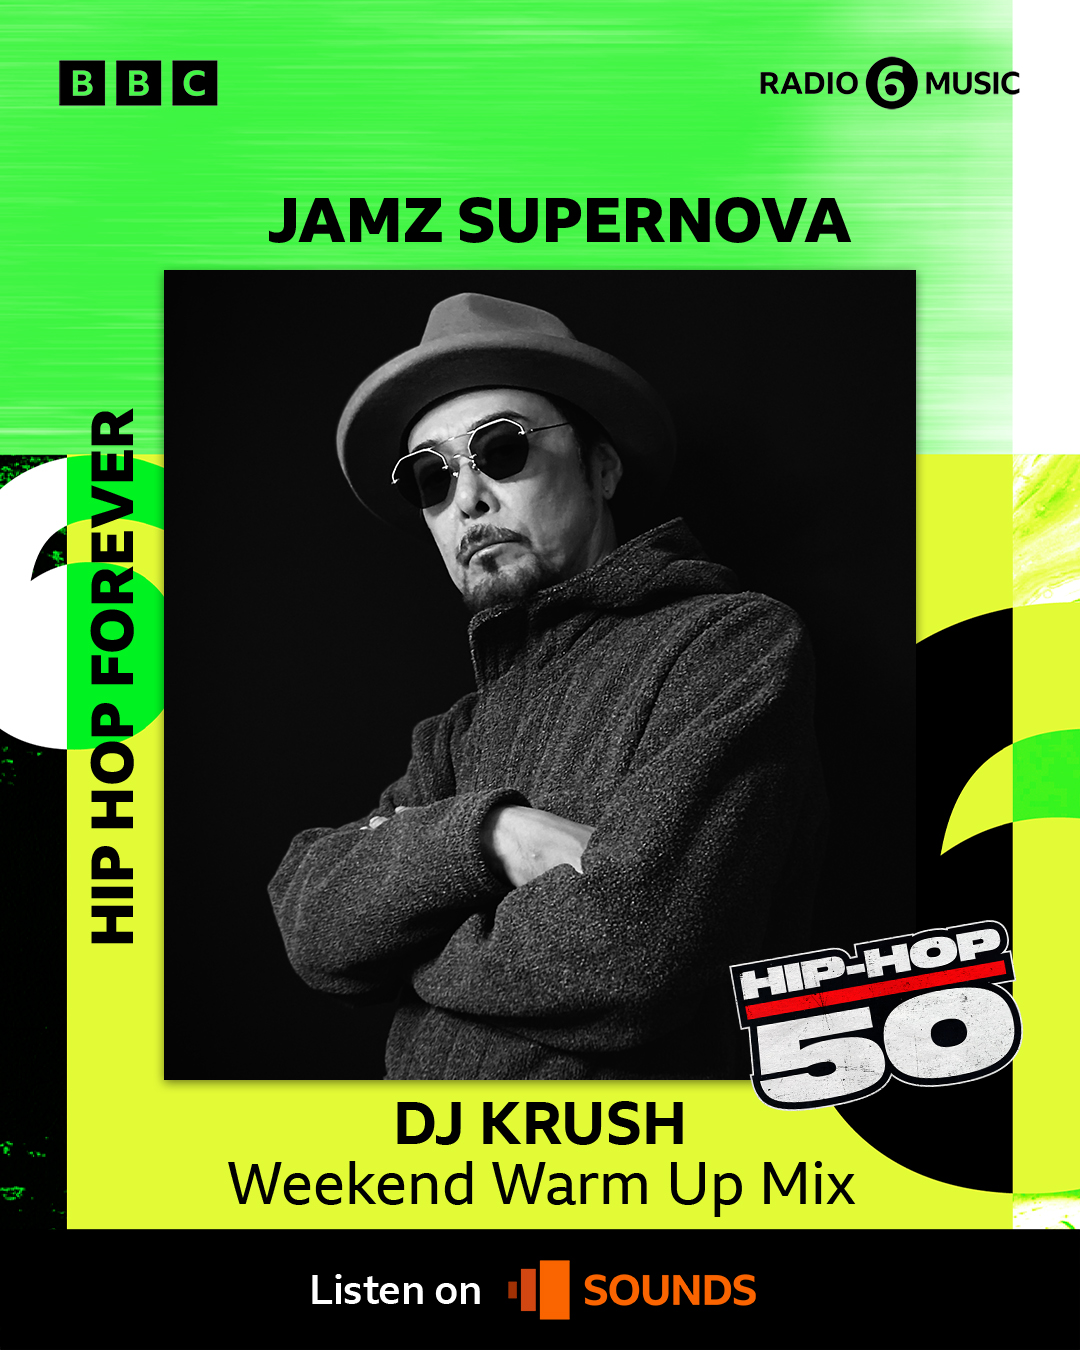 DJ KRUSH Weekend Warm Up Mix | BBC RADIO 6 MUSIC Jamz 